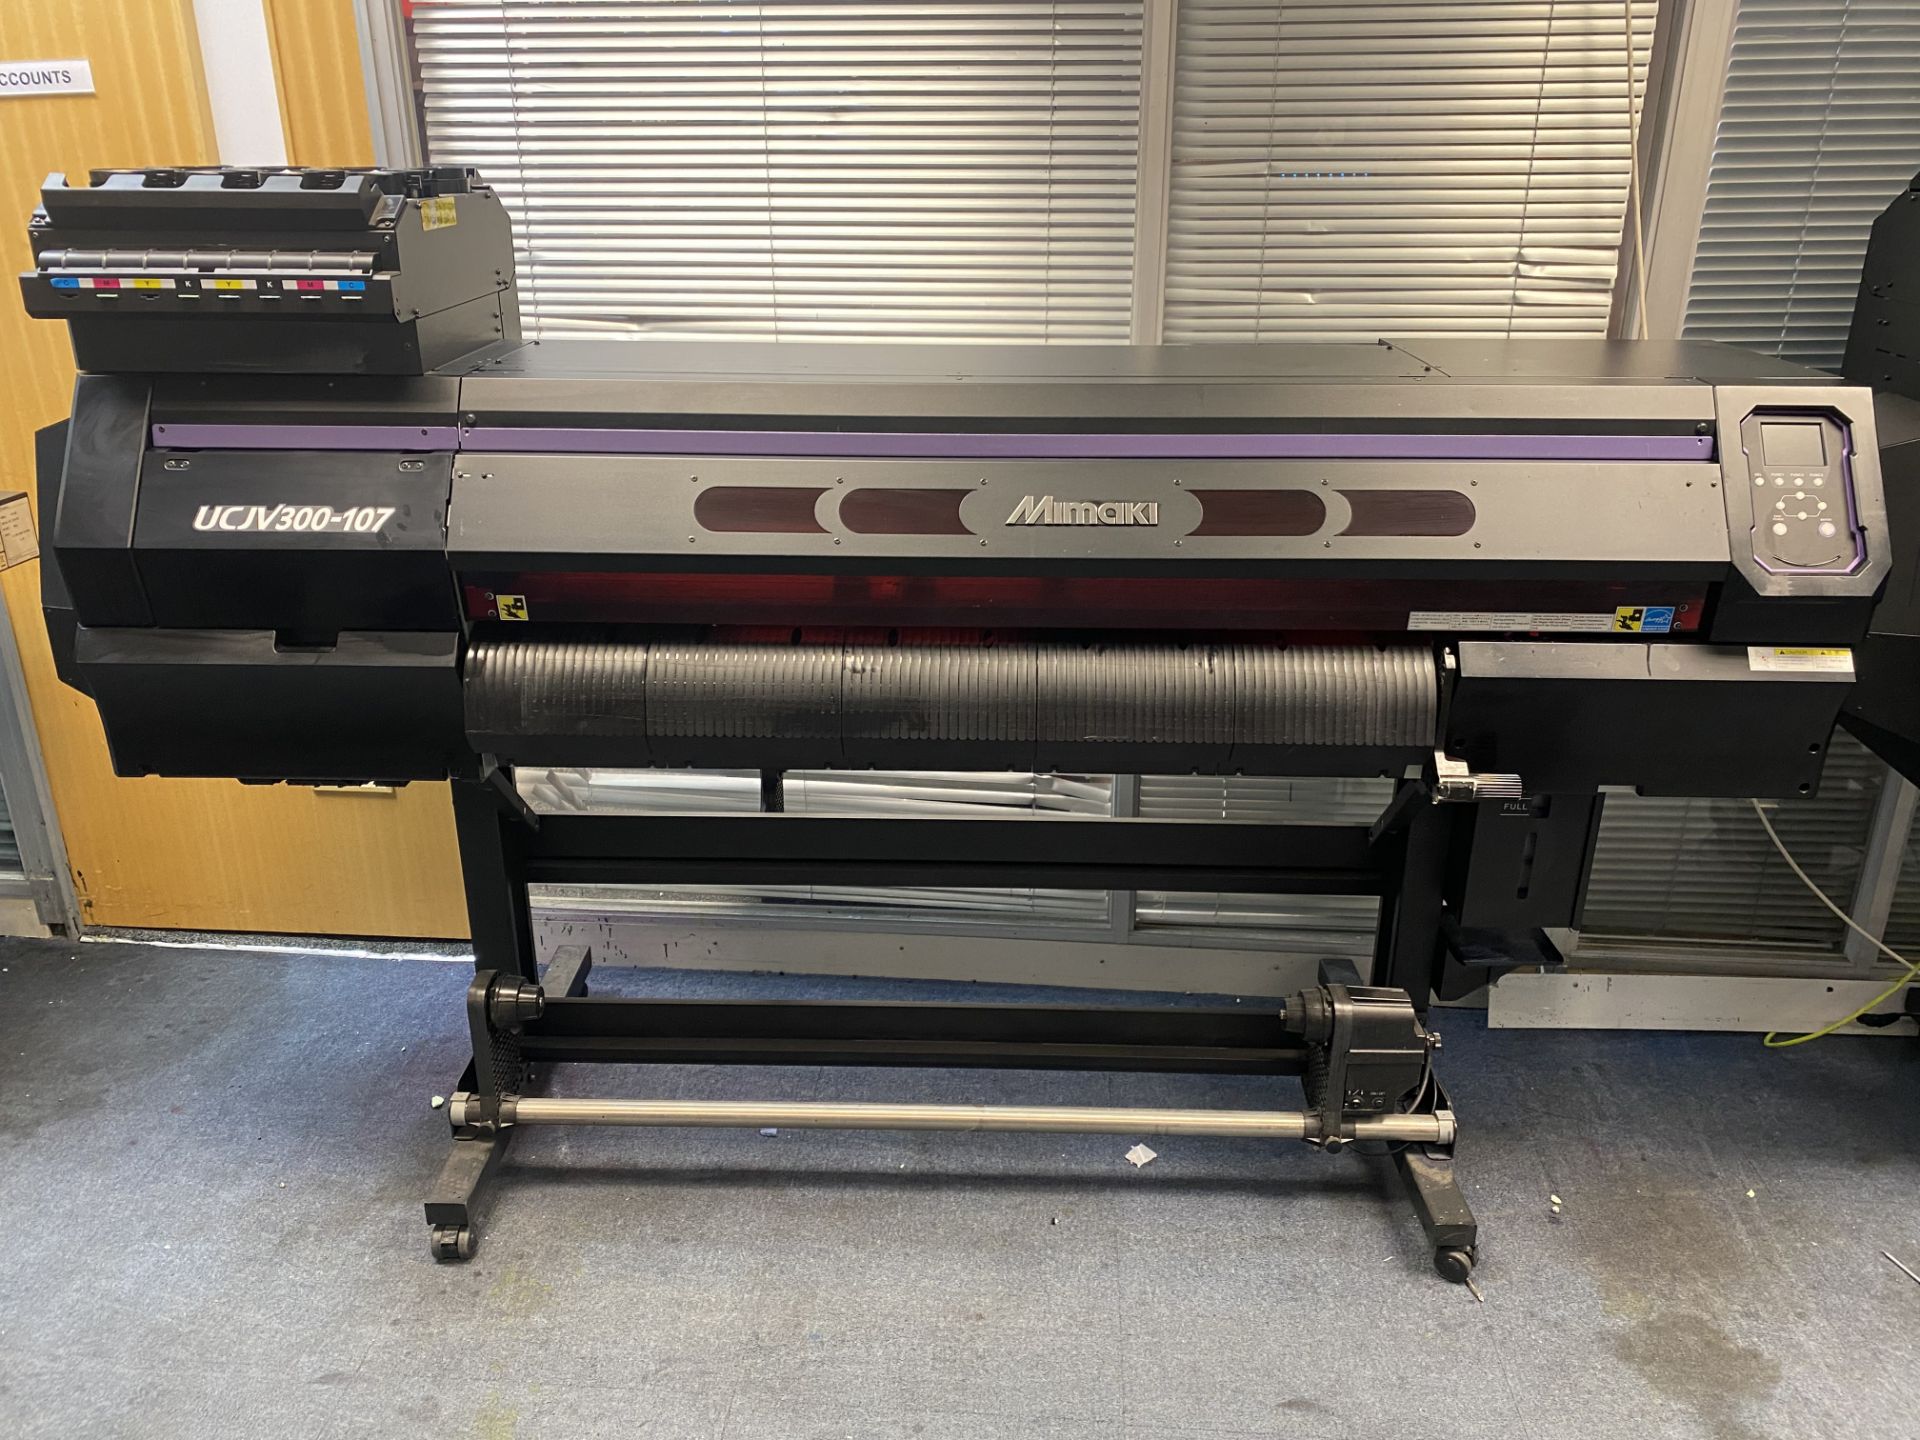 (R52) Mimaki UCJV 300-107 Roll to Roll UV Printer